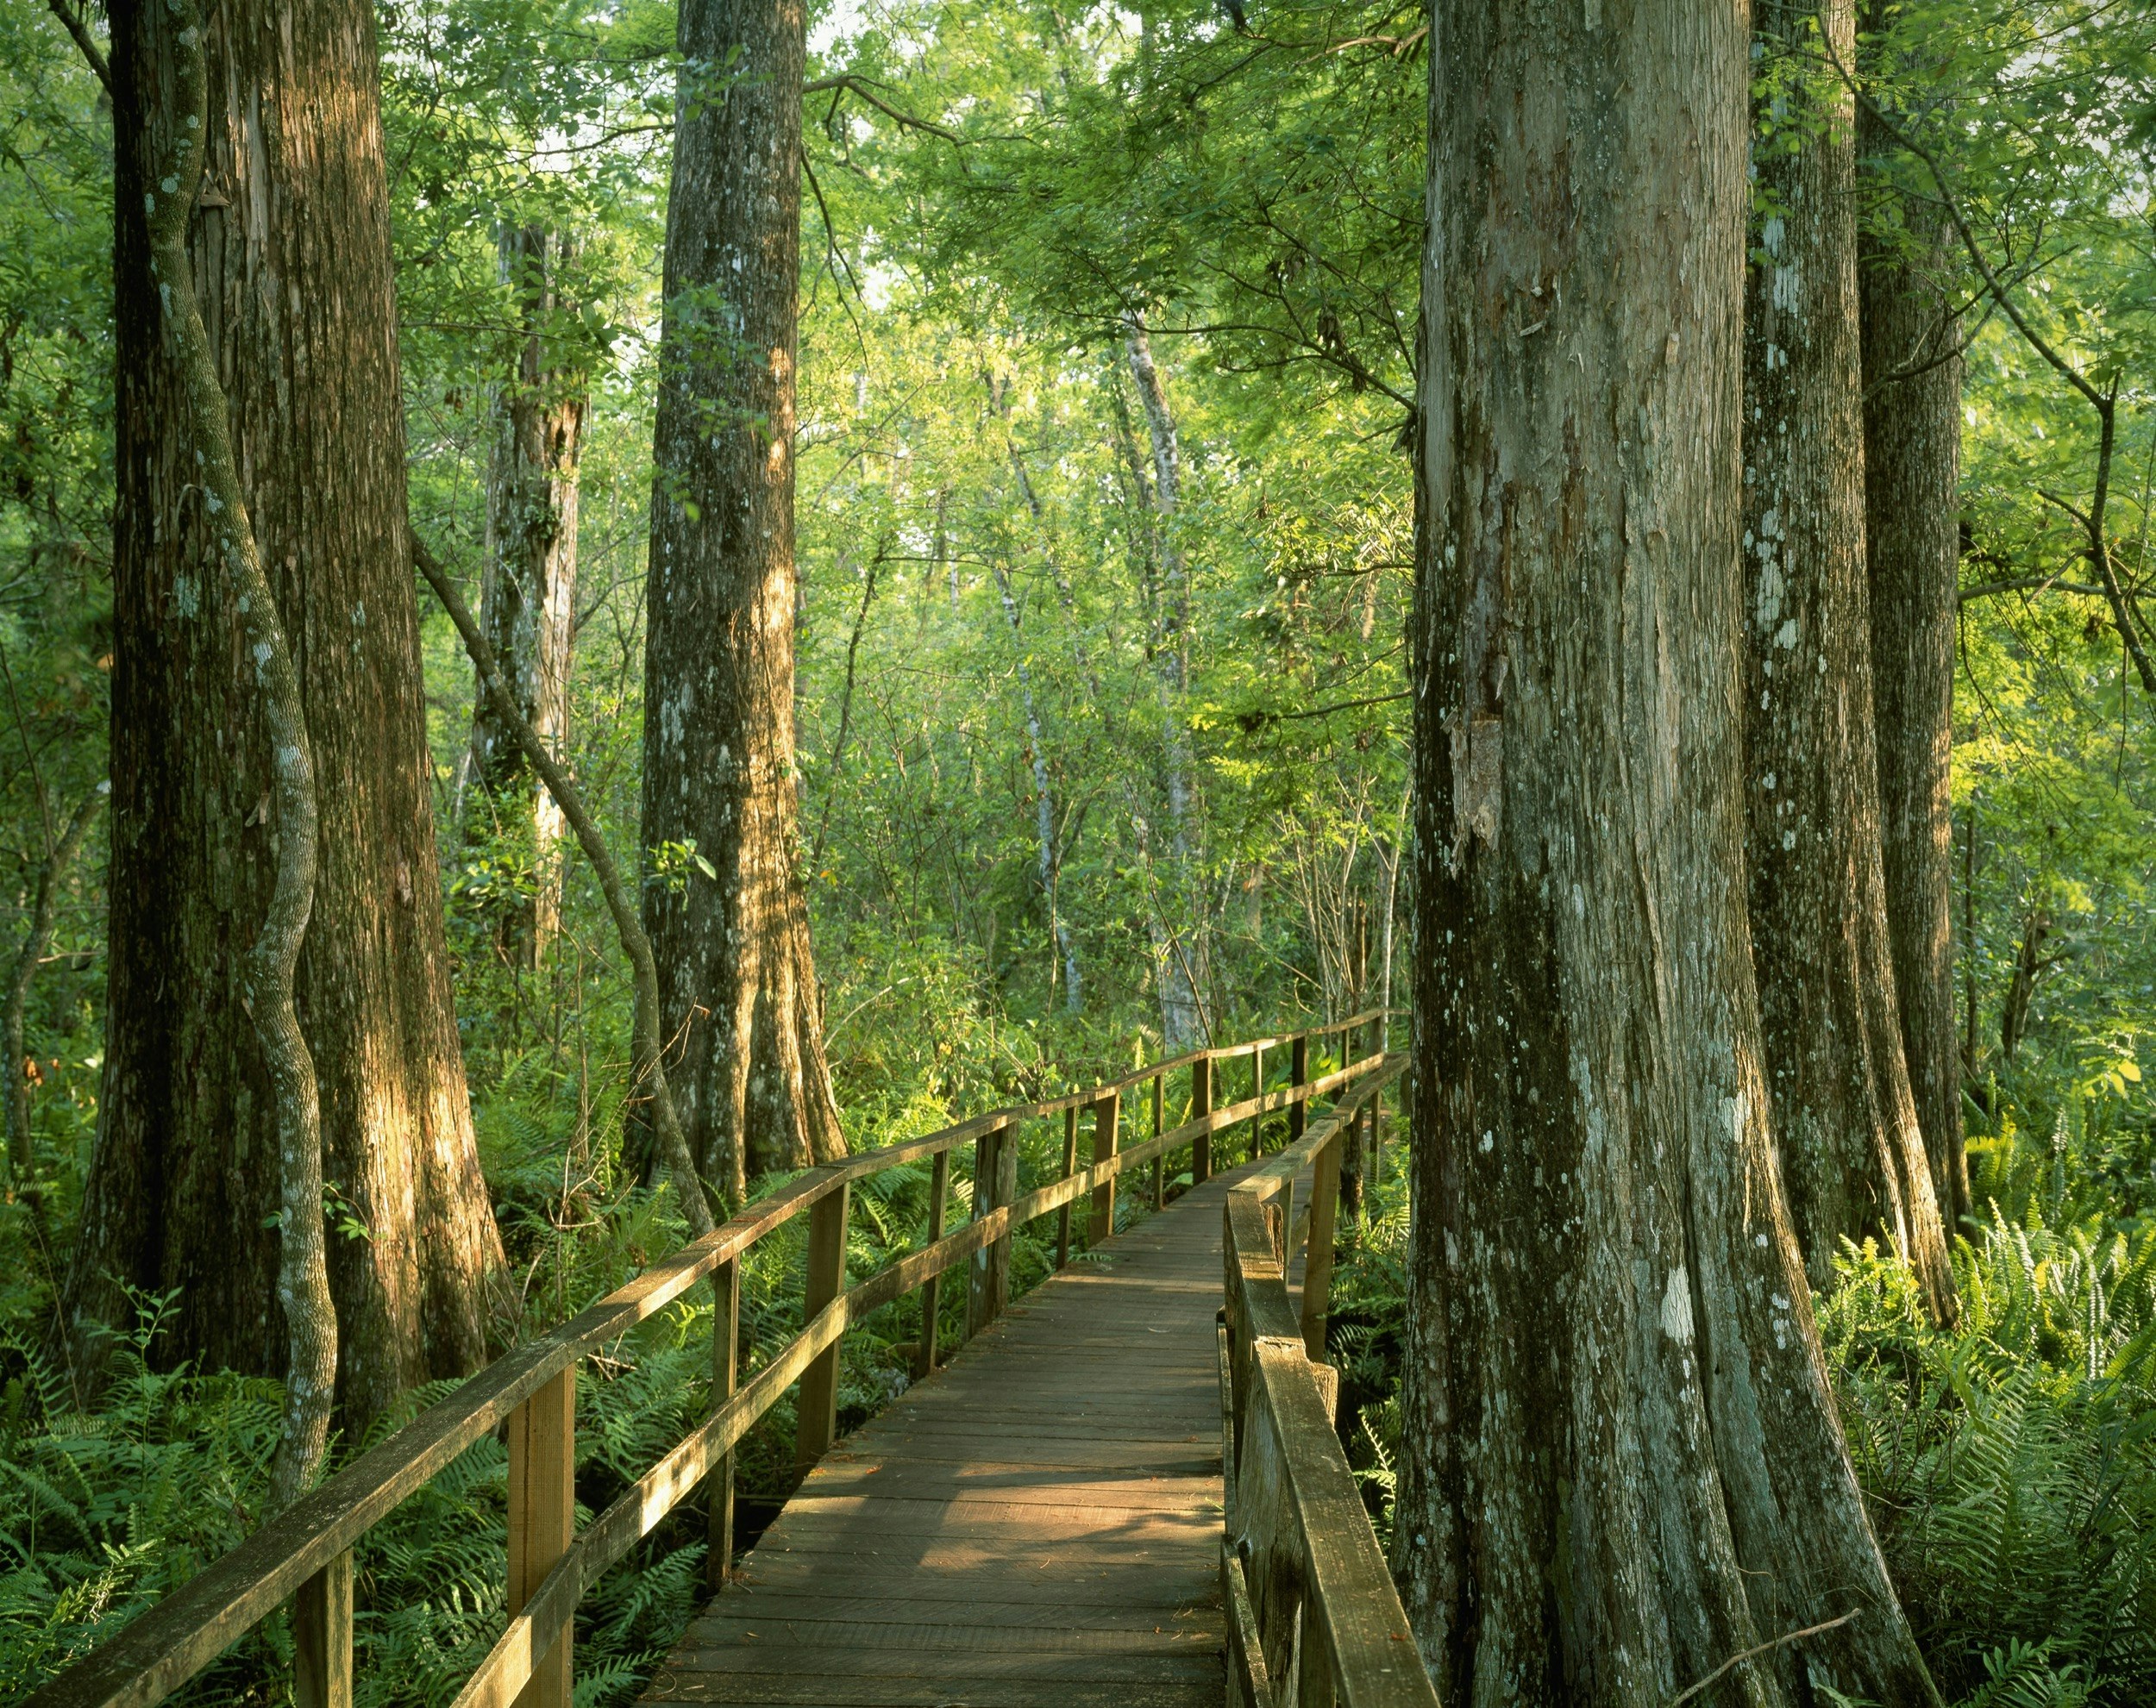 Boardwalk Through Forest of Bald Cypress Trees in Corkscrew Swamp